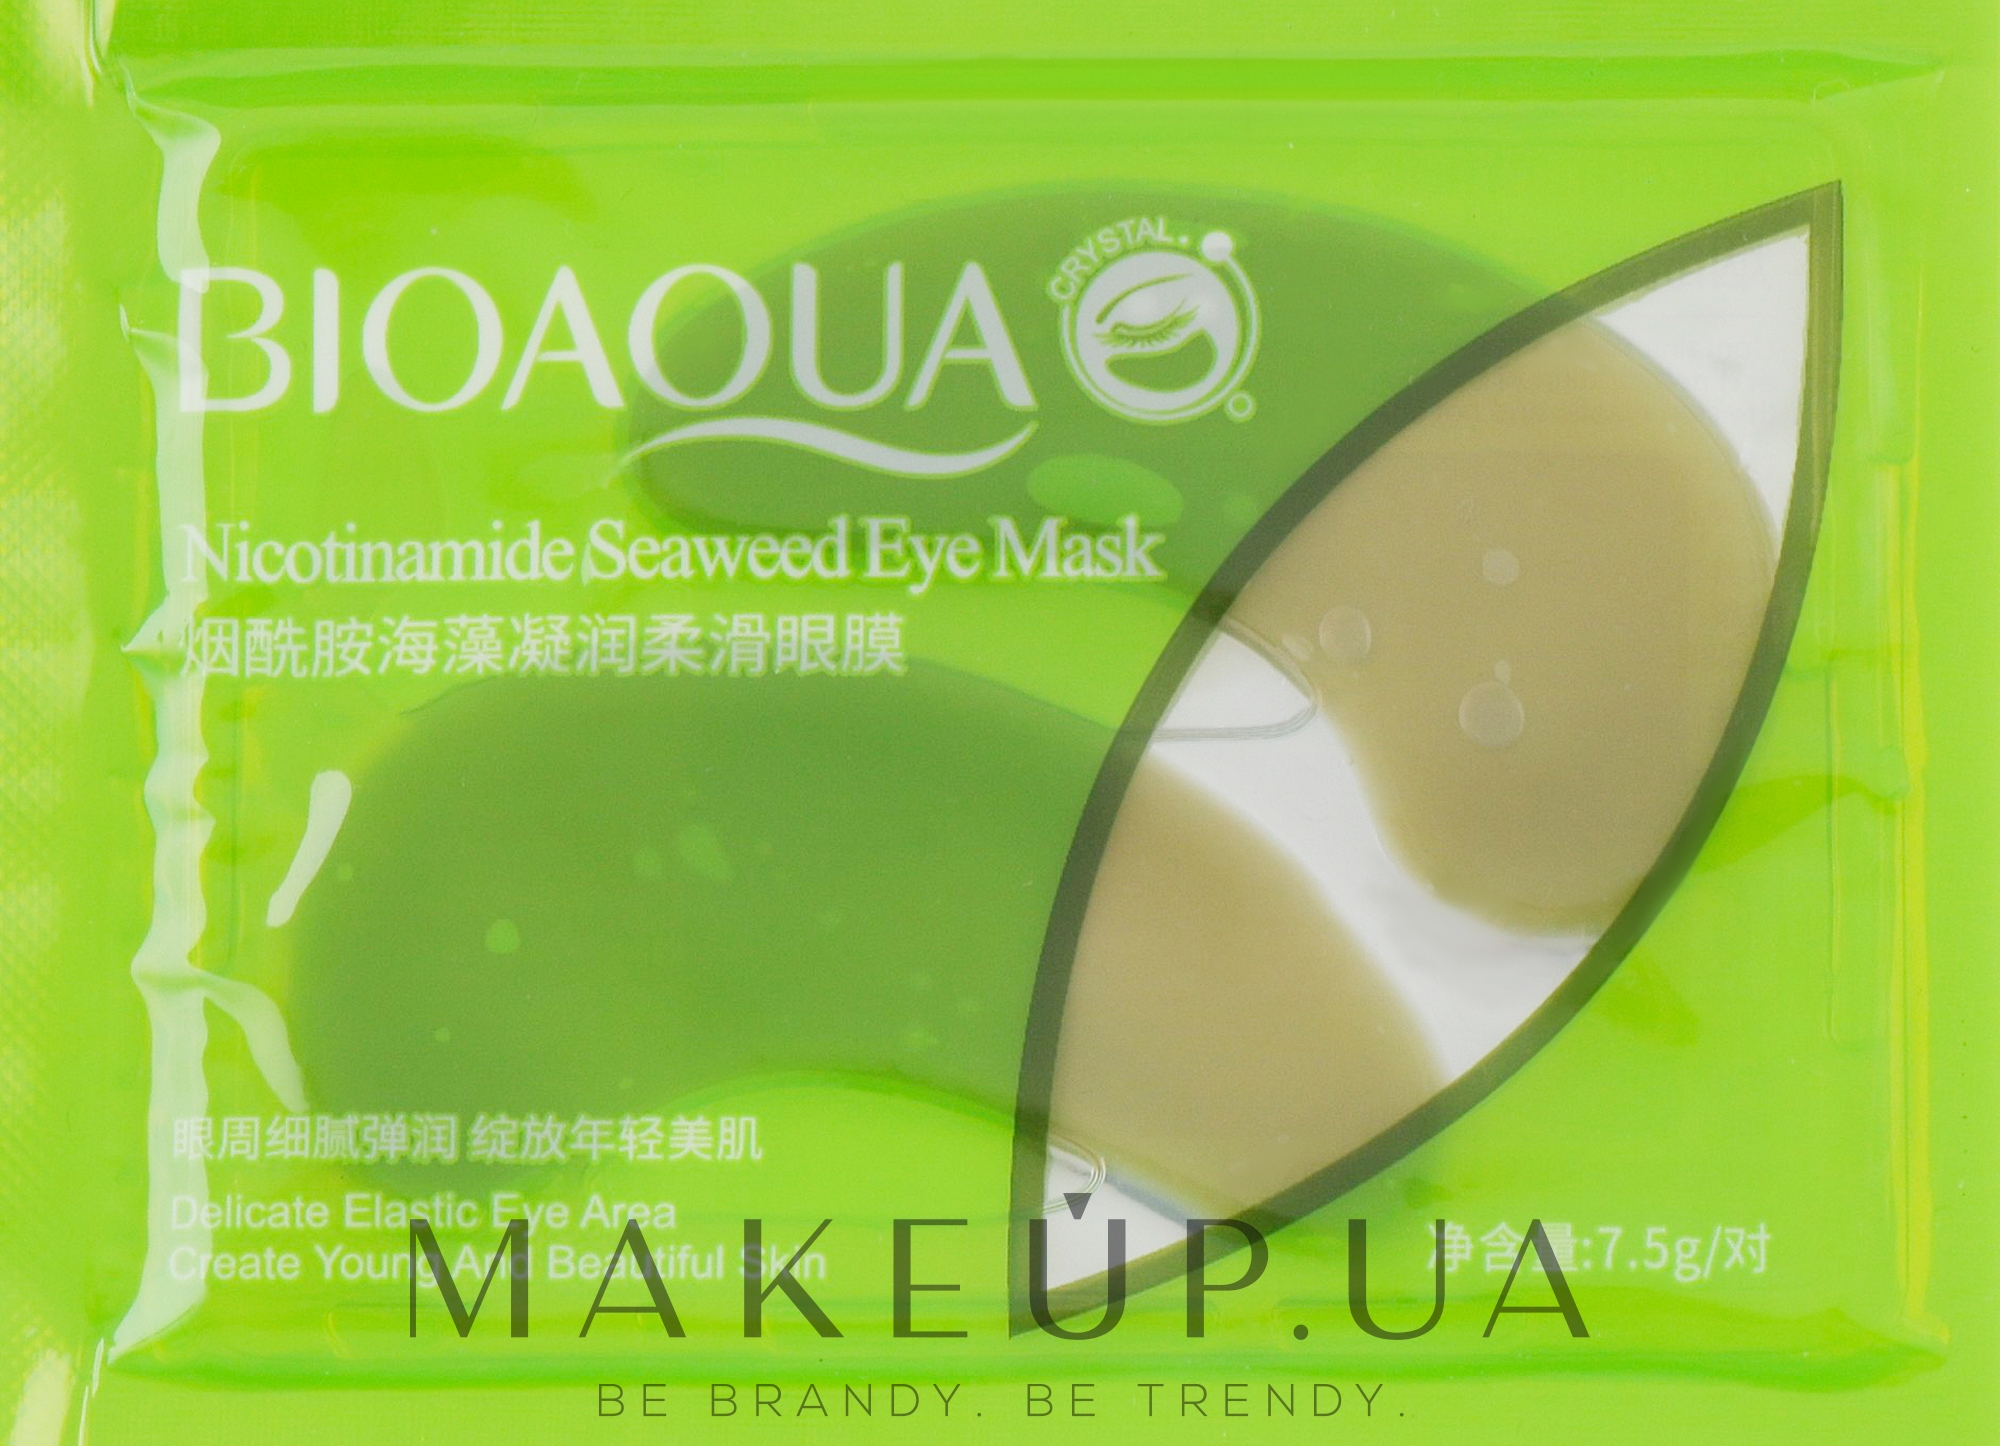 Nicotinamide moisturizing mask. BIOAQUA Nicotinamide Seaweed Eye Mask. Патчи для глаз BIOAQUA Nicotinamide Seaweed Eye Mask. Маска Niacinamide Moisturizing Mask. Патчи БИОАКВА зеленые.